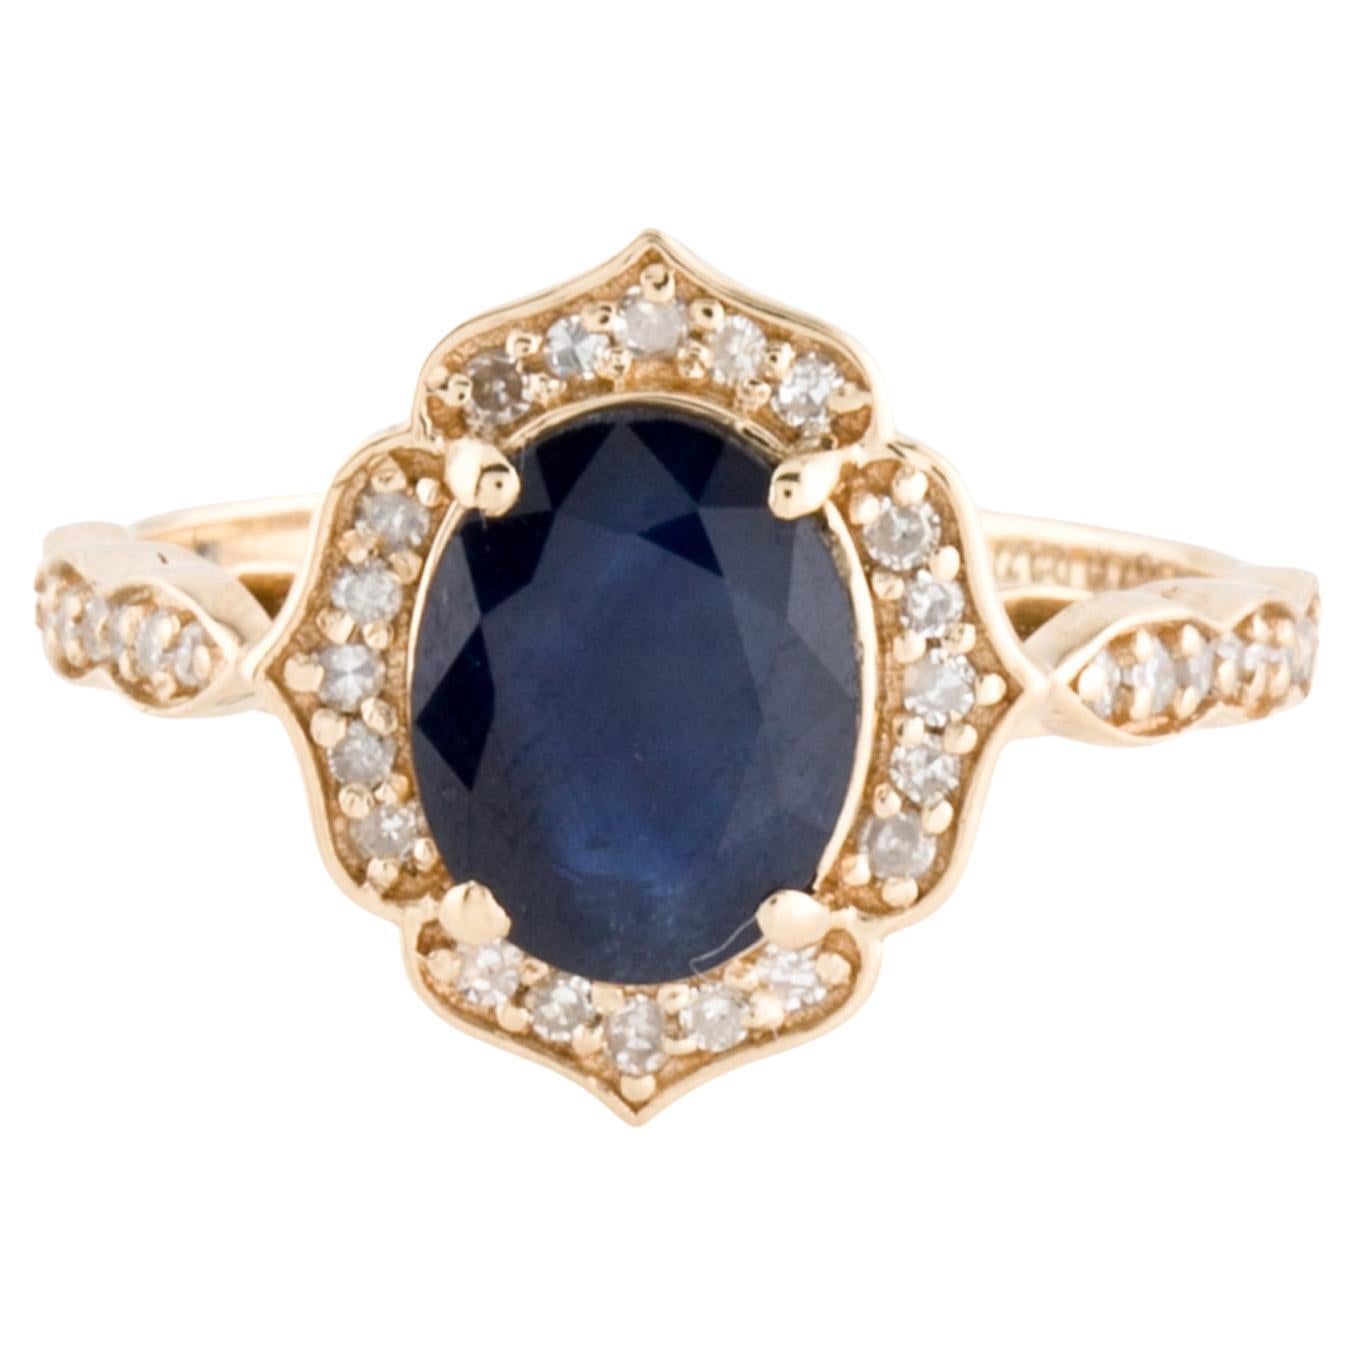 Luxurious 14K Gold Sapphire & Diamond Cocktail Ring Size 6.75 Statement Jewelry